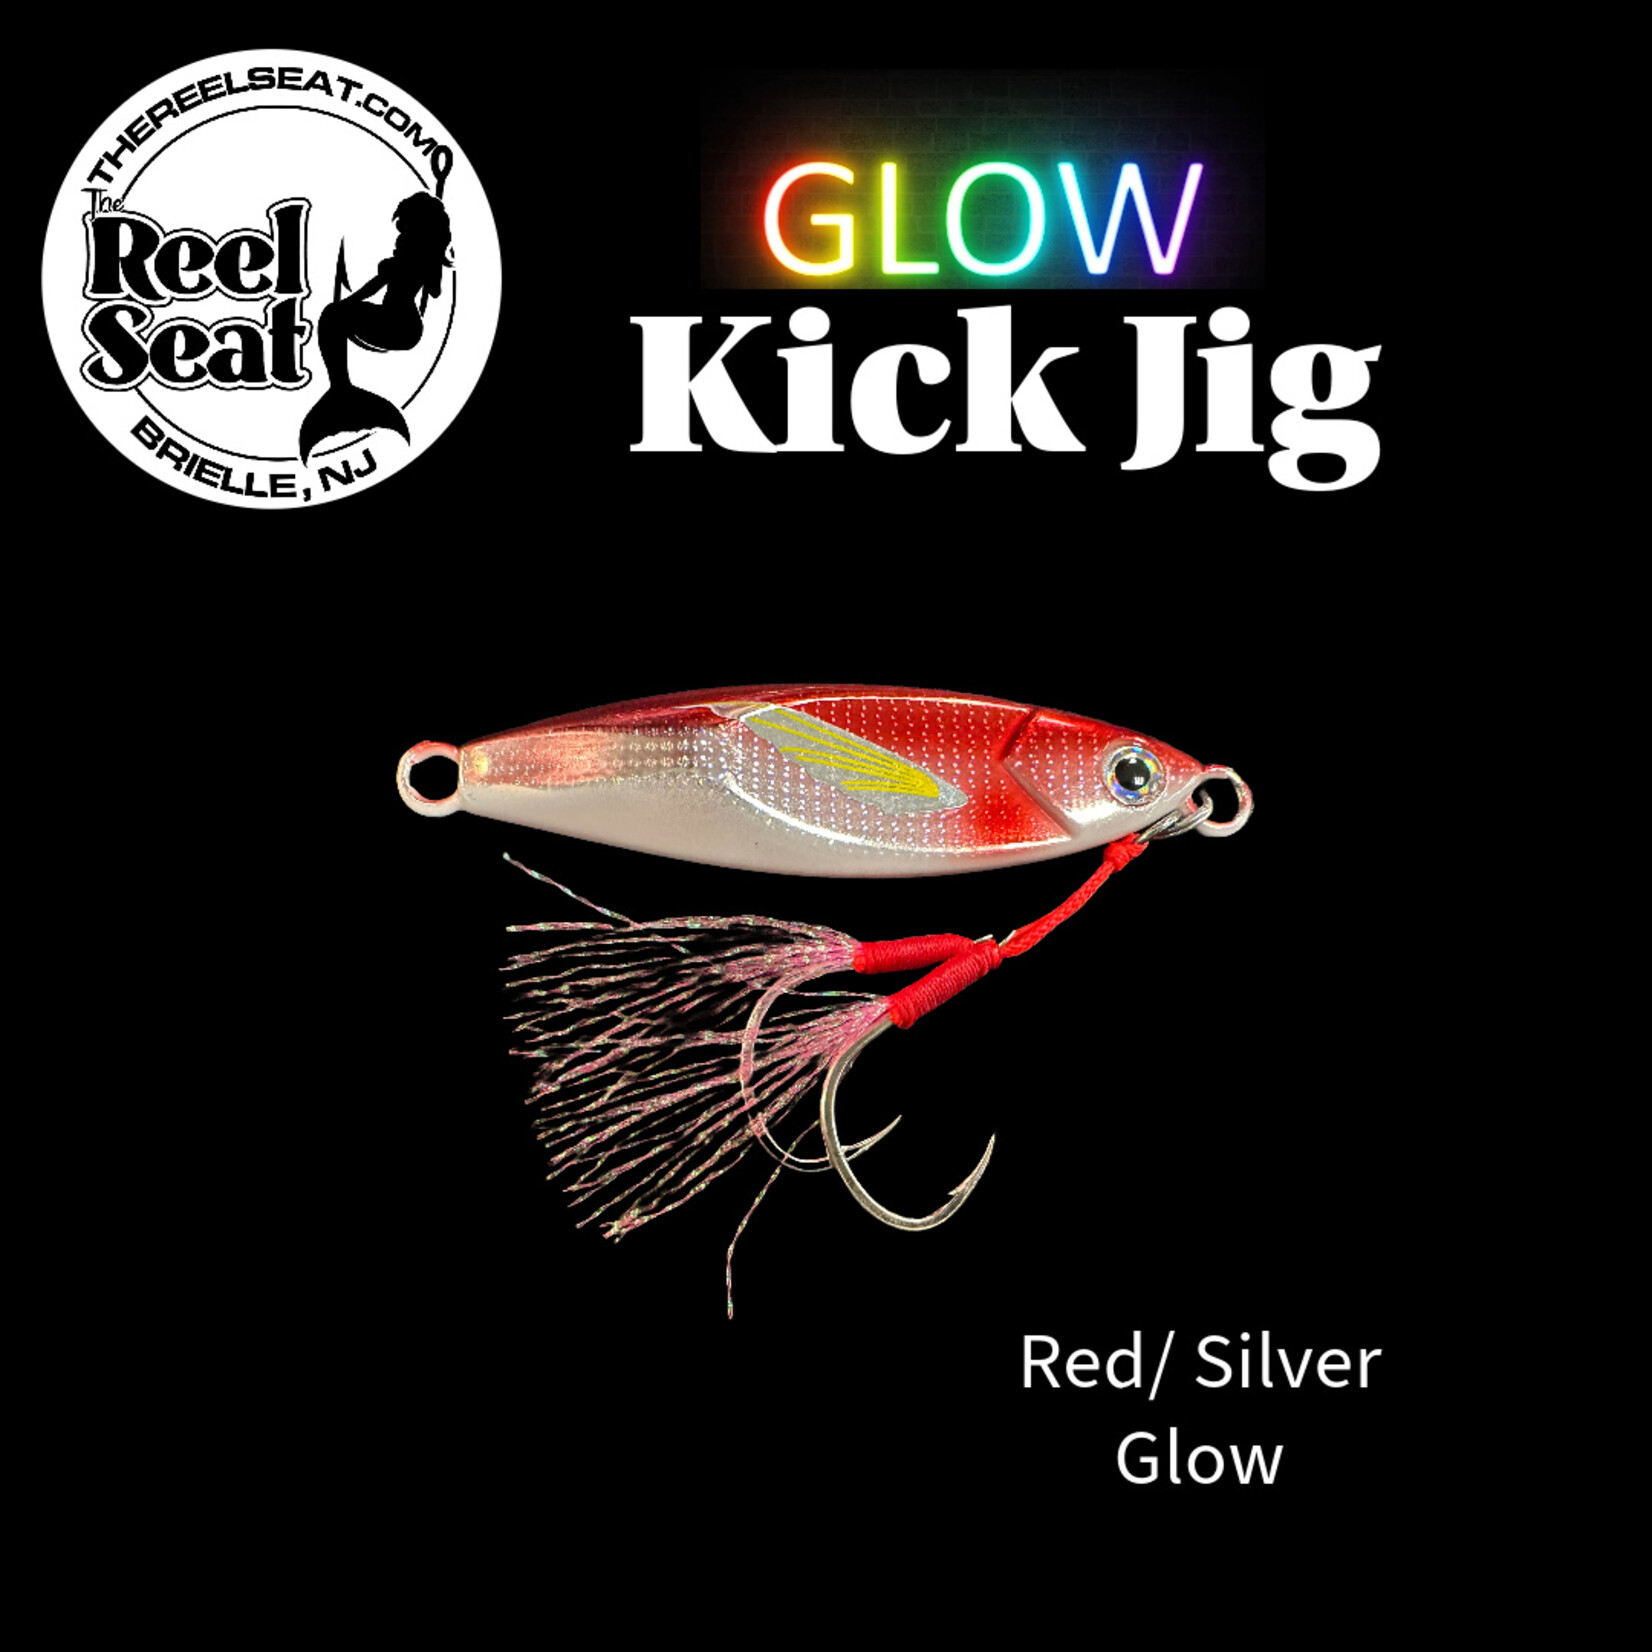 The Reel Seat RS Kick Jig Glow